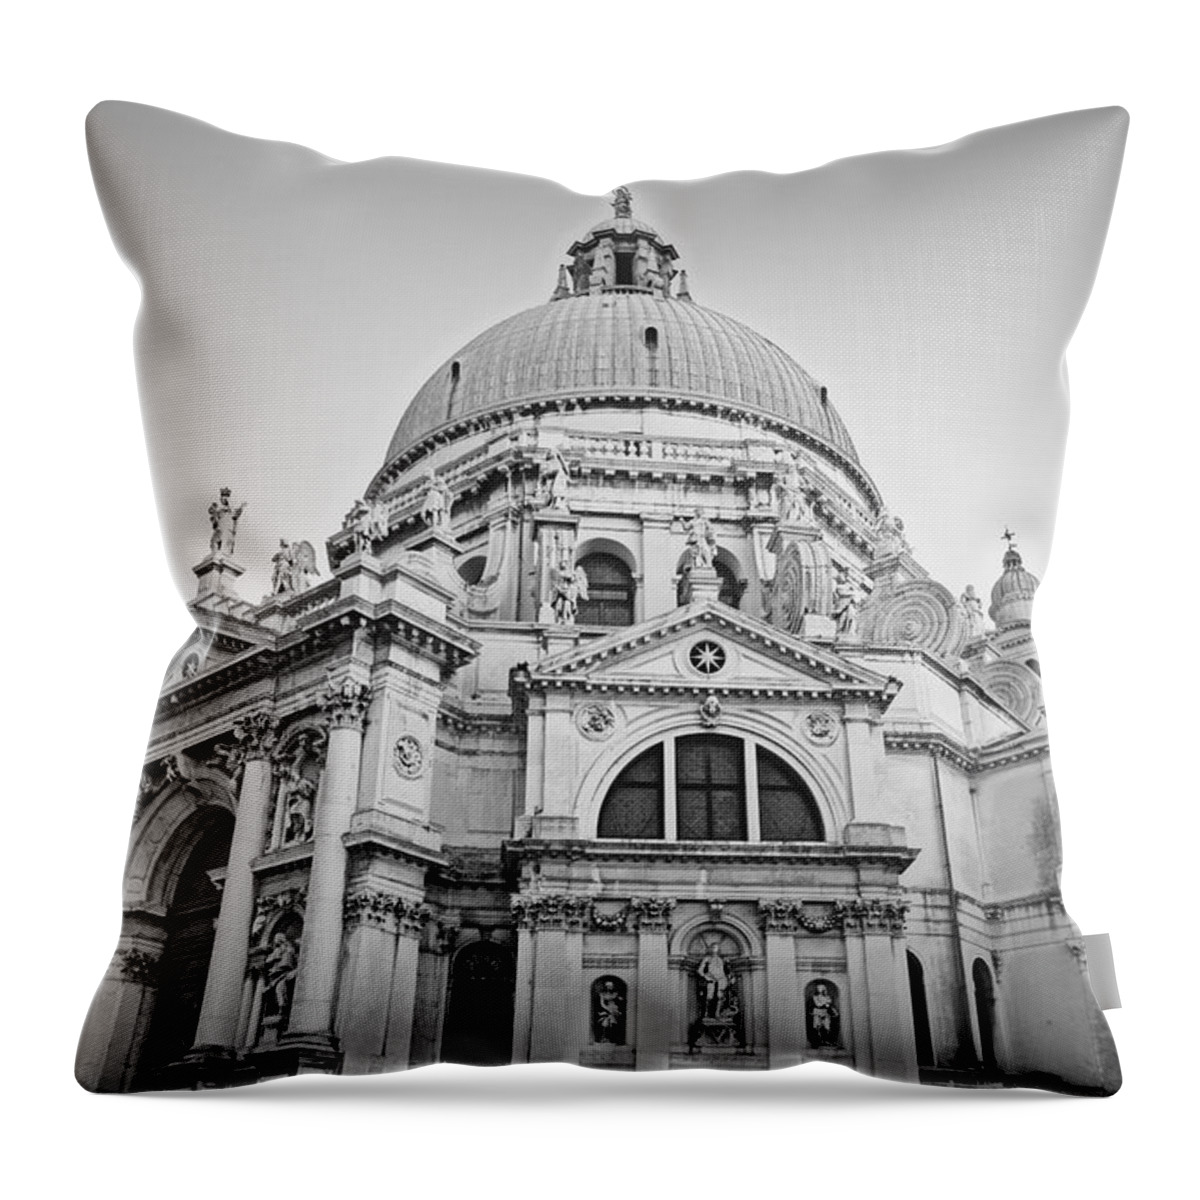 City Throw Pillow featuring the photograph Basilica di Santa Maria by Jonathan Kerckhaert